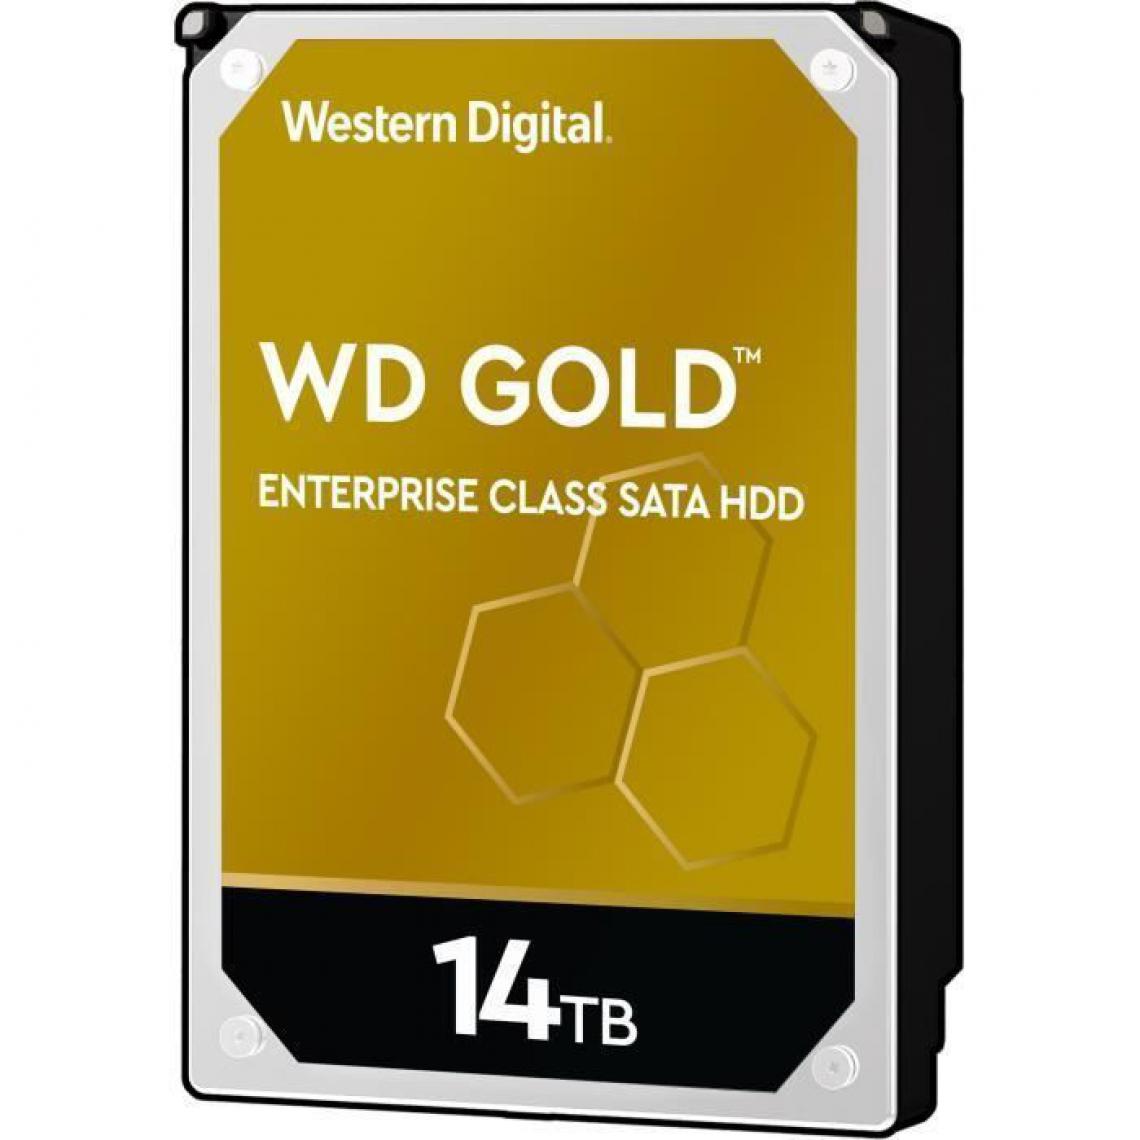 Western Digital - WESTERN DIGITAL Stockage interne Gold™ SATA HDD de classe entreprise, 14 To - Disque Dur interne